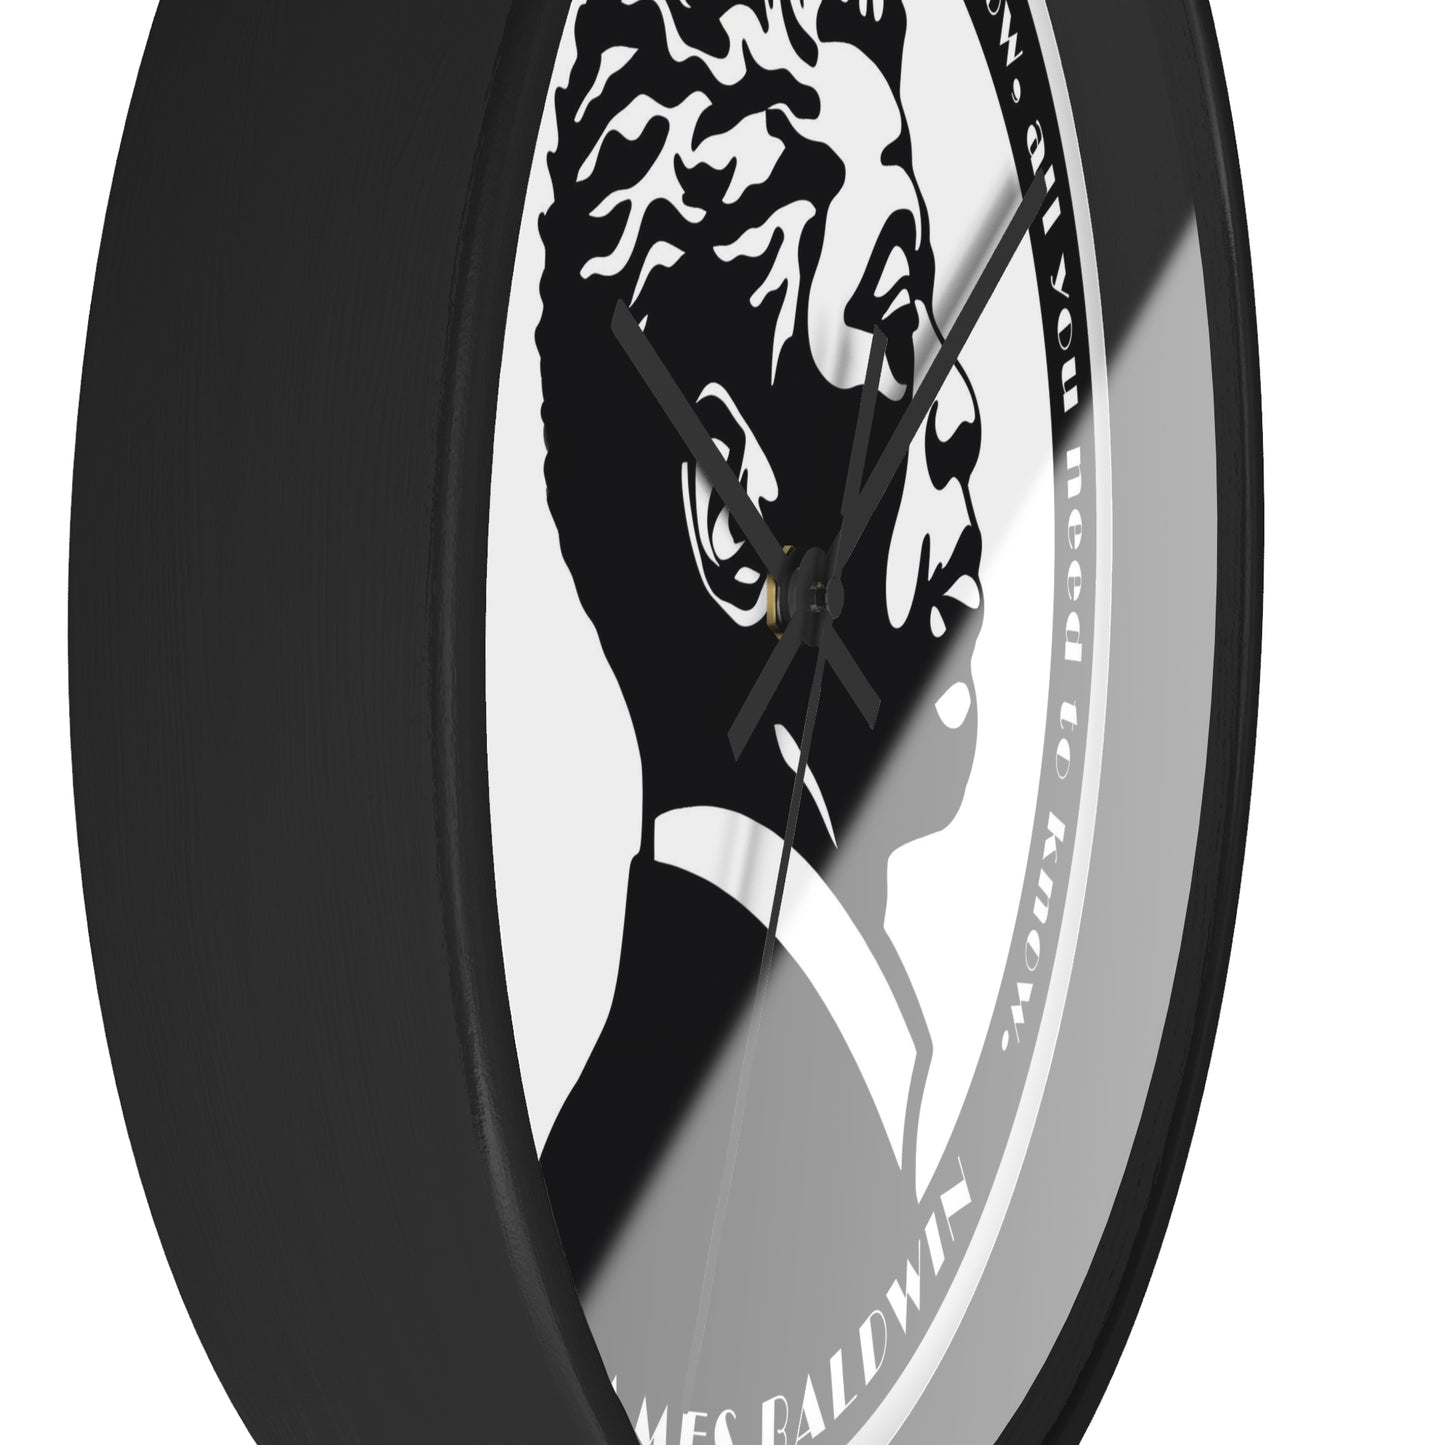 James Baldwin ”Trust Life” Wall Clock - Round